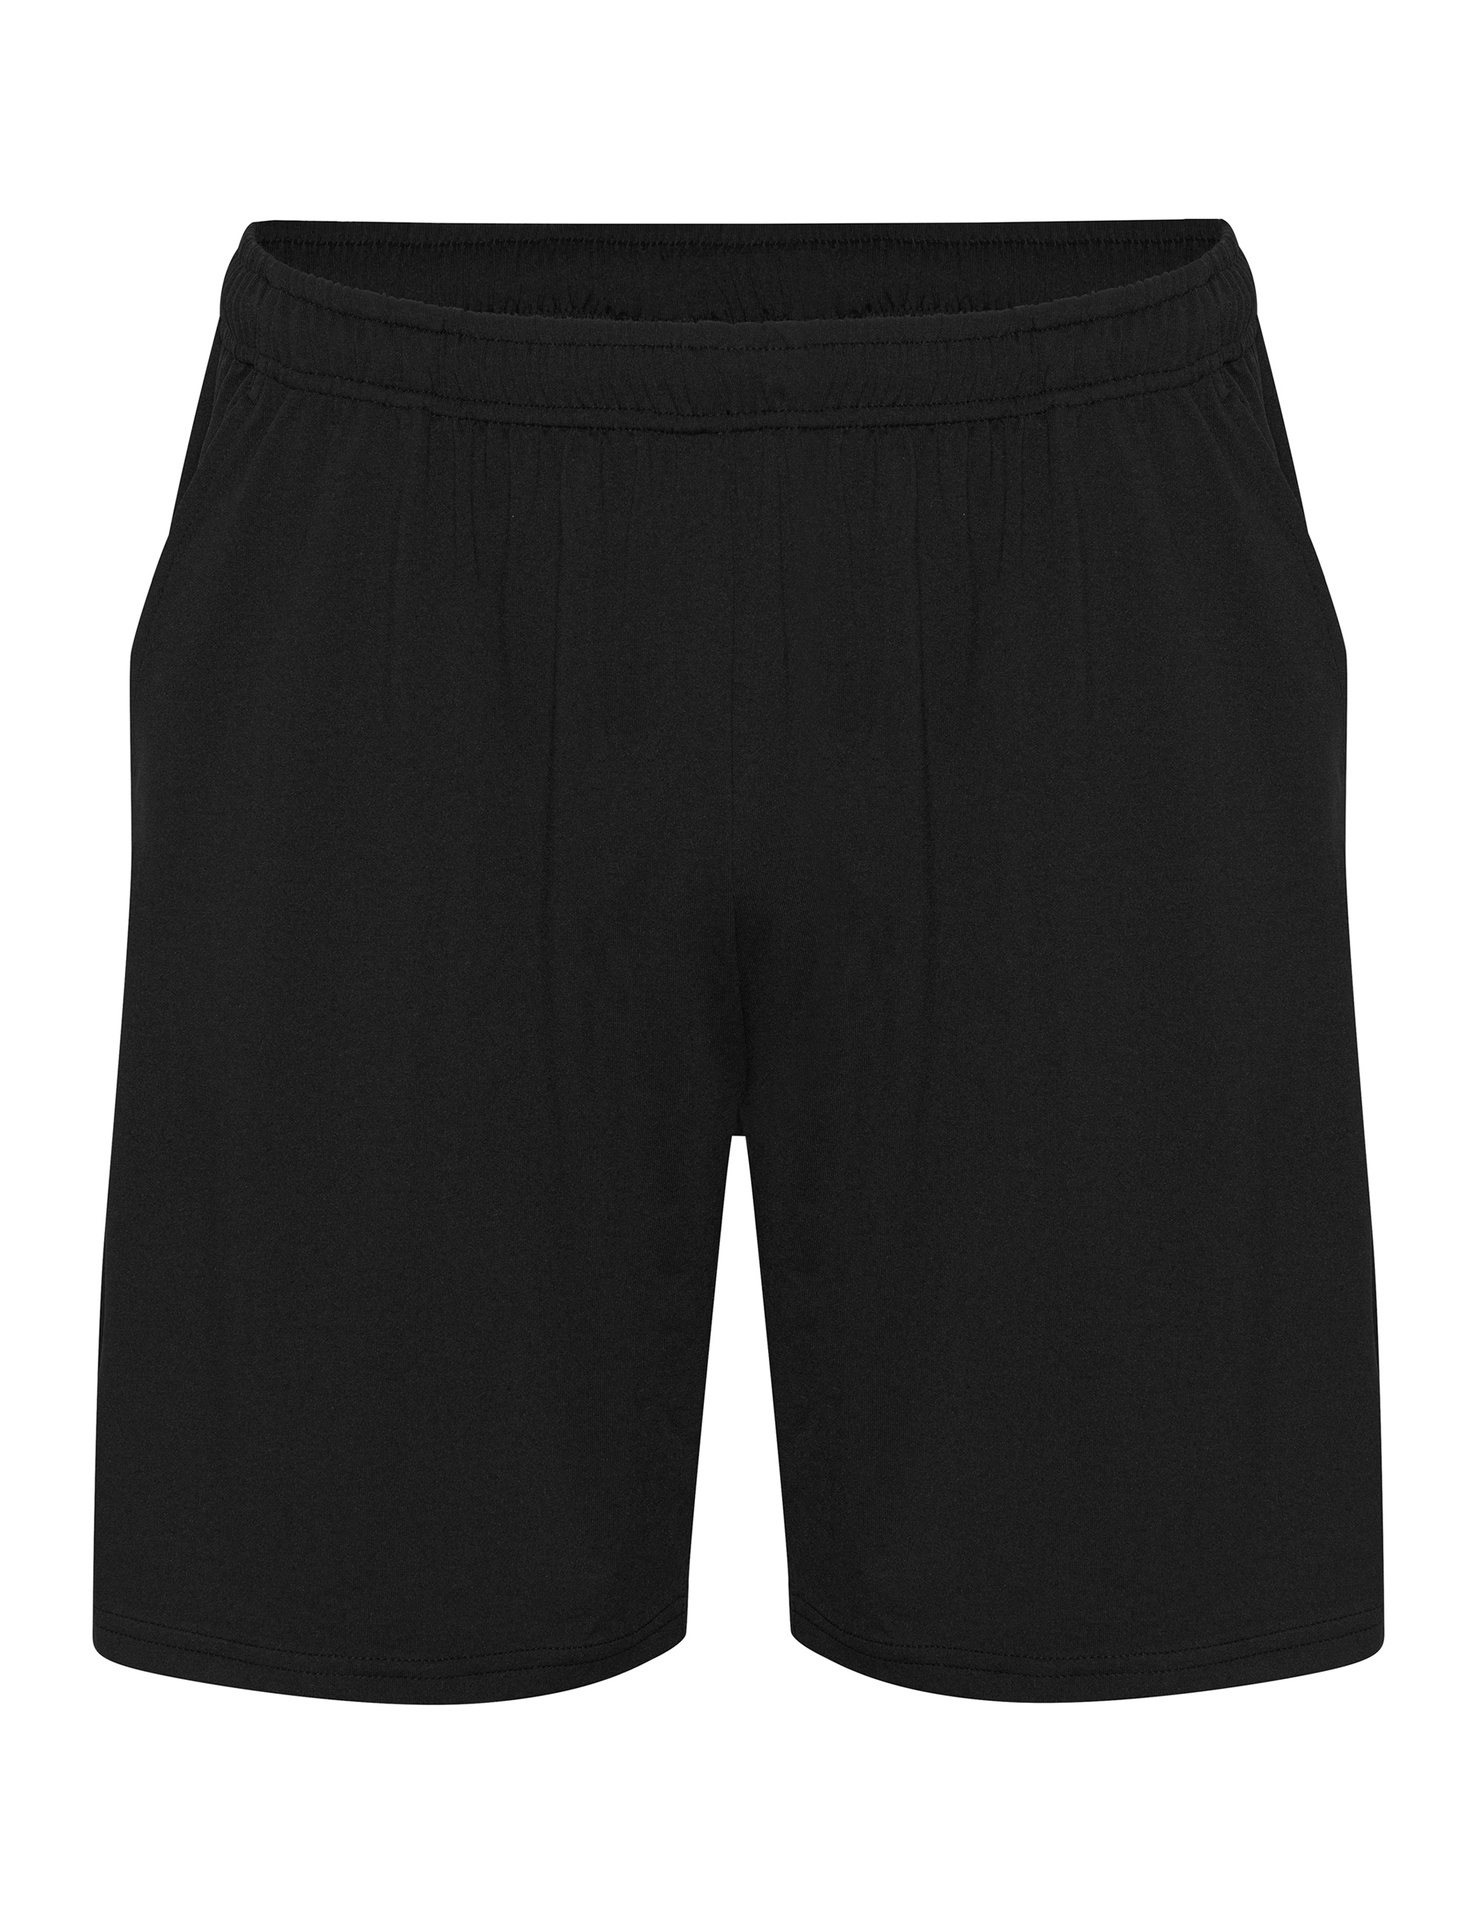 [PR/03862] Unisex Recycled Performance Shorts (Black 03, 3XL)